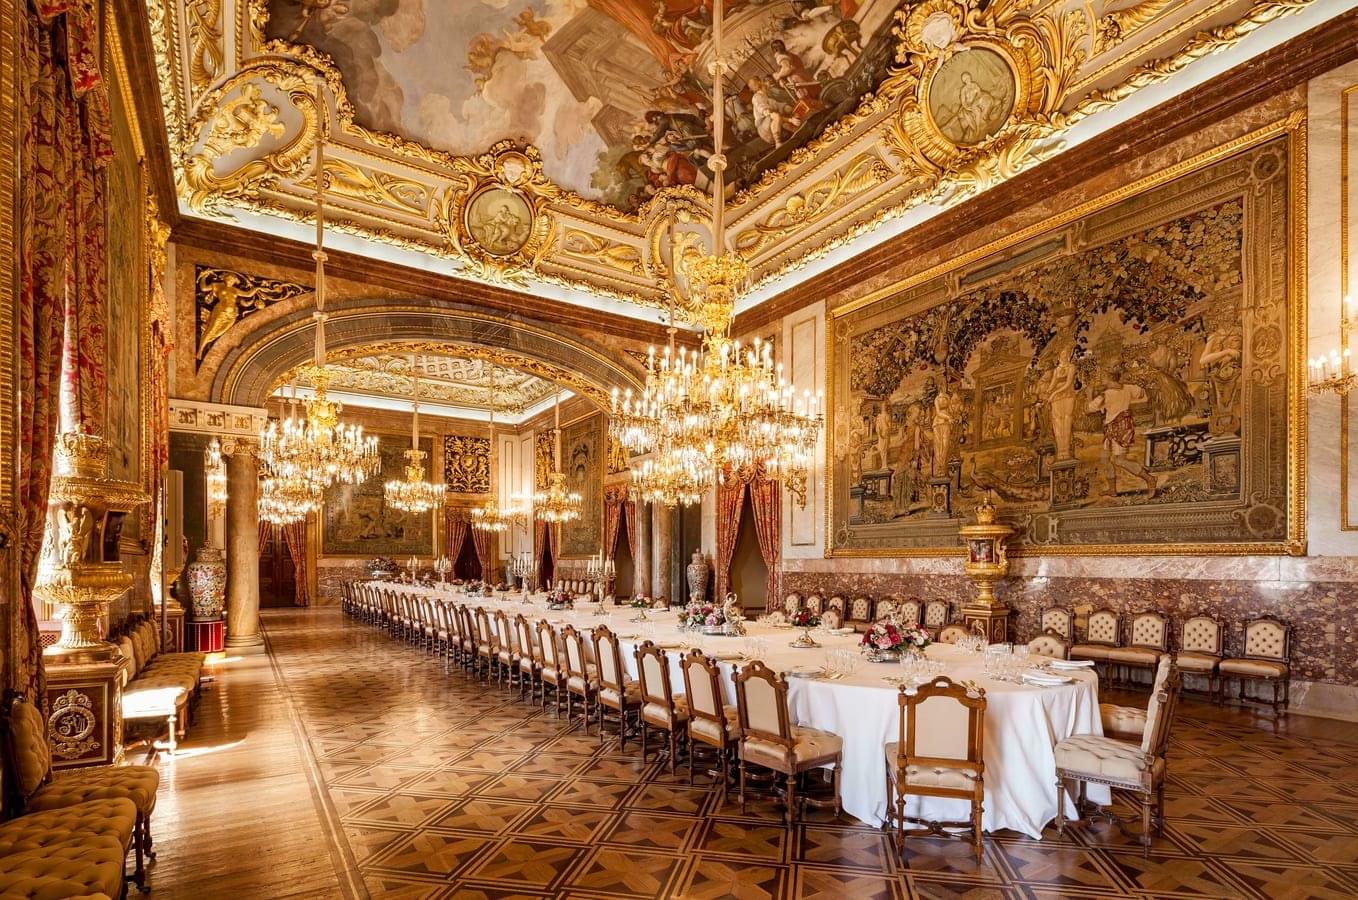 Why You Should Visit Royal Palace of Madrid?